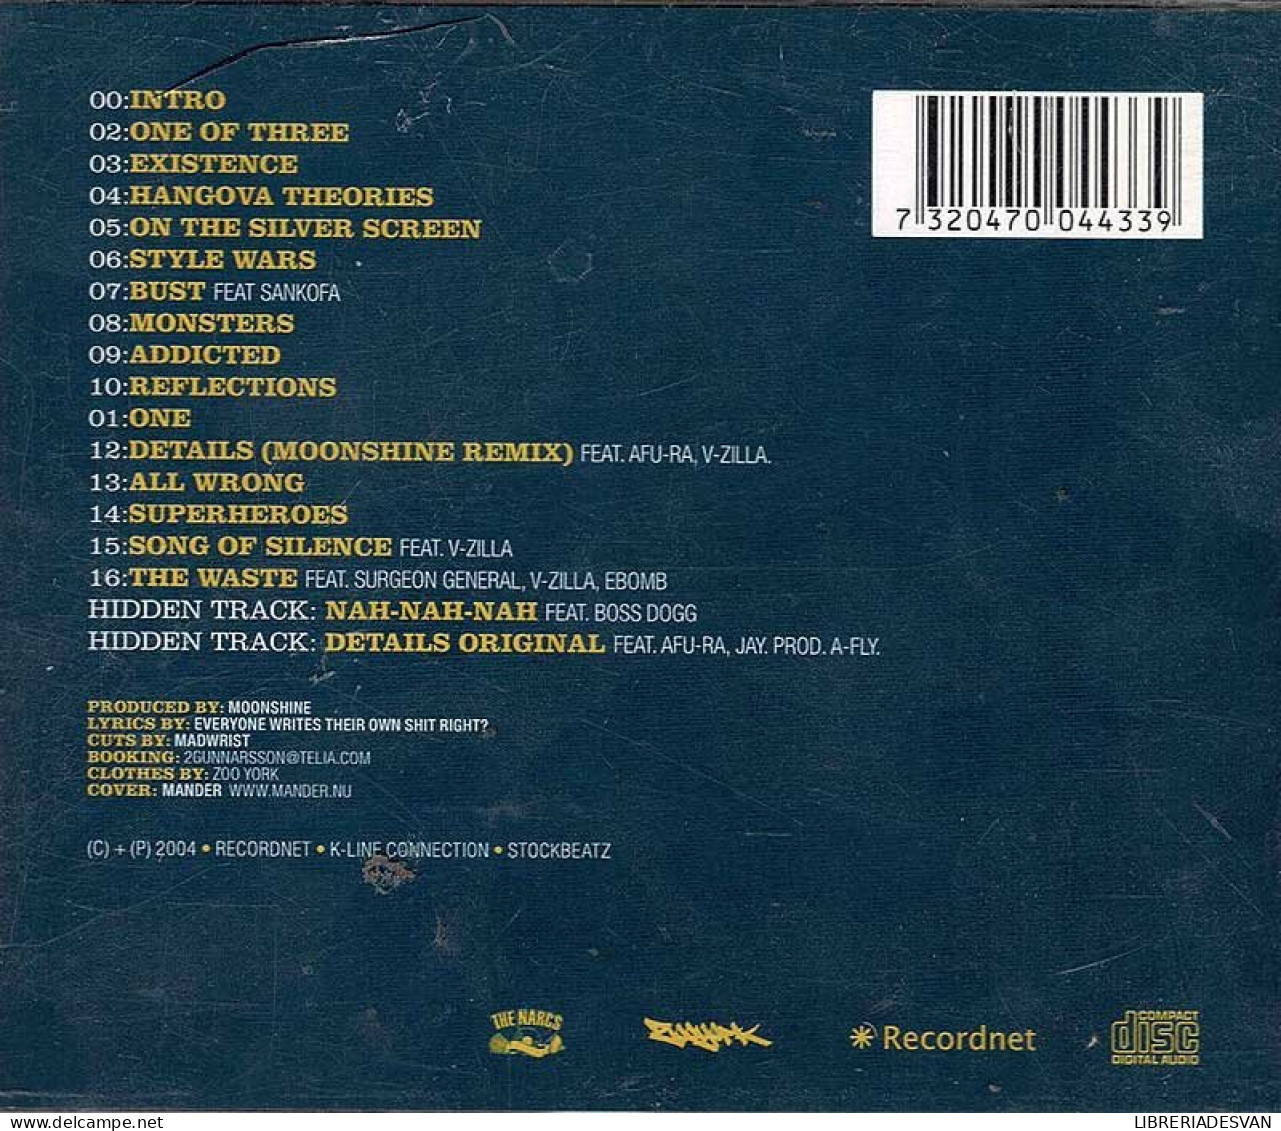 Bucc - Back To Square One. CD - Rap & Hip Hop